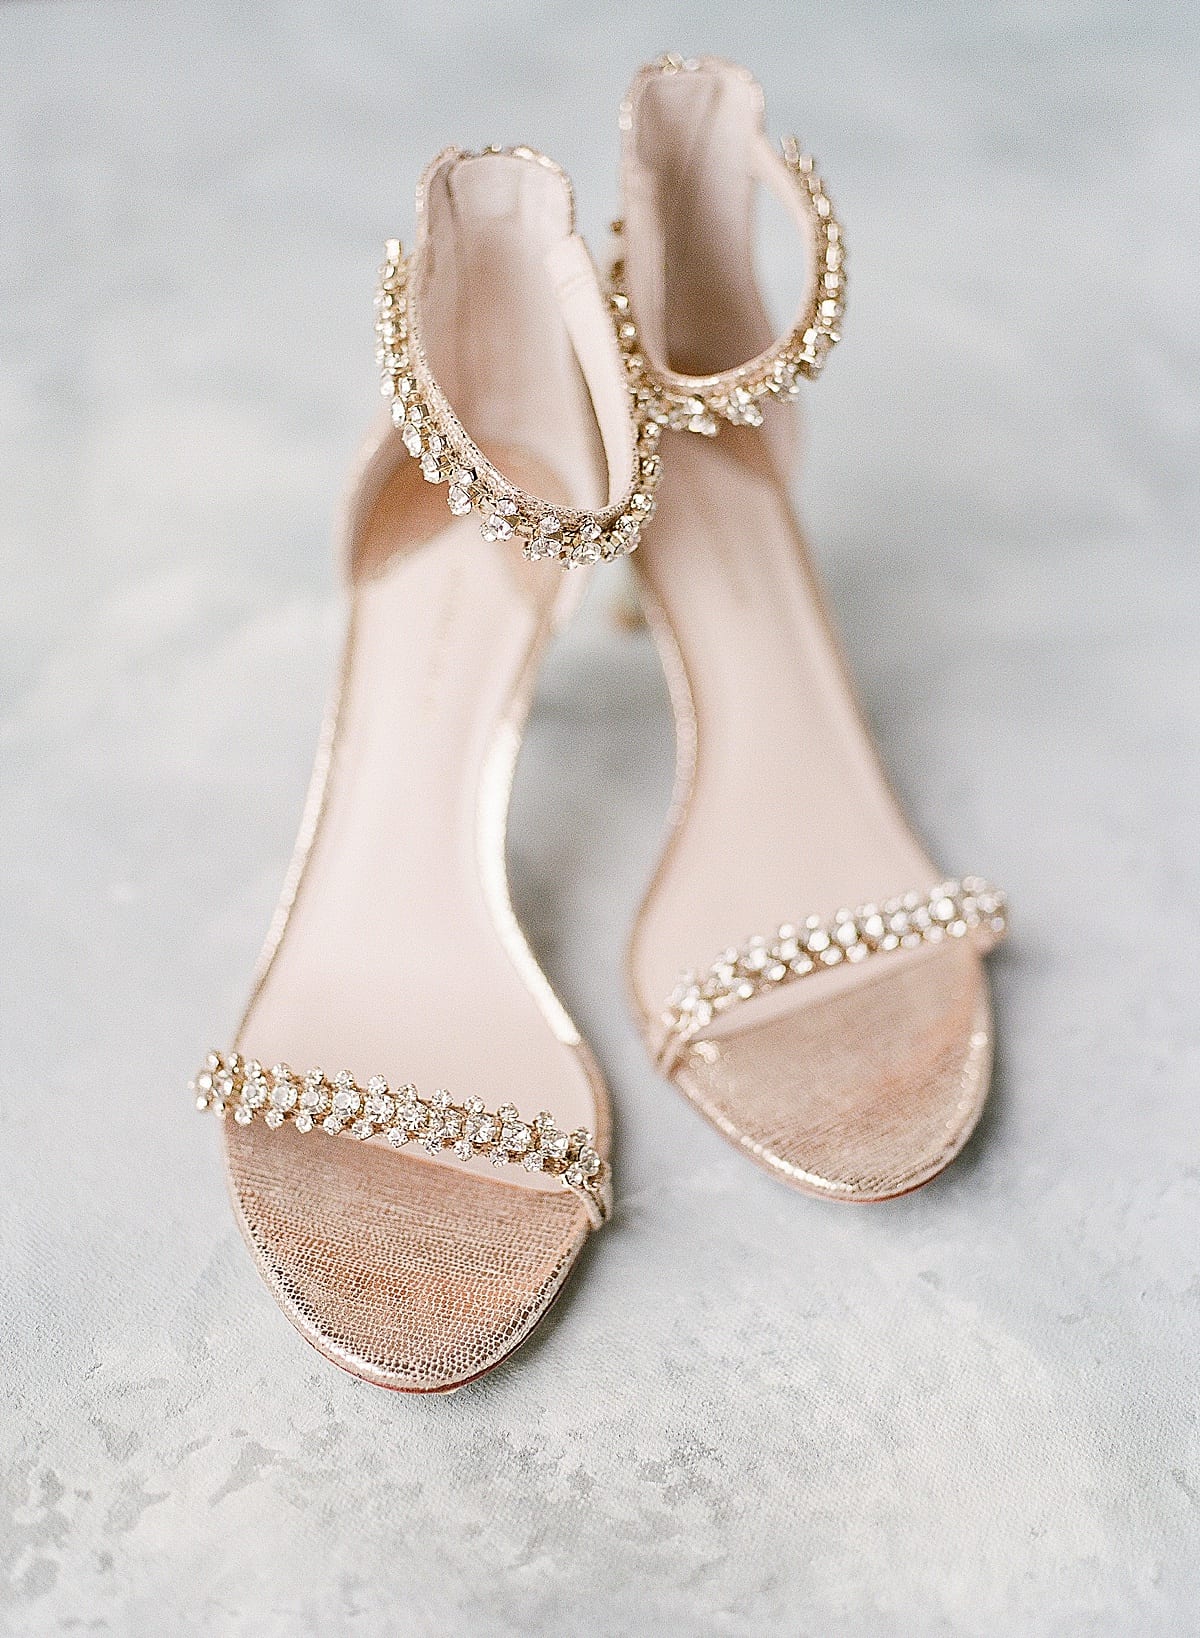 Bridal Shoes Photo